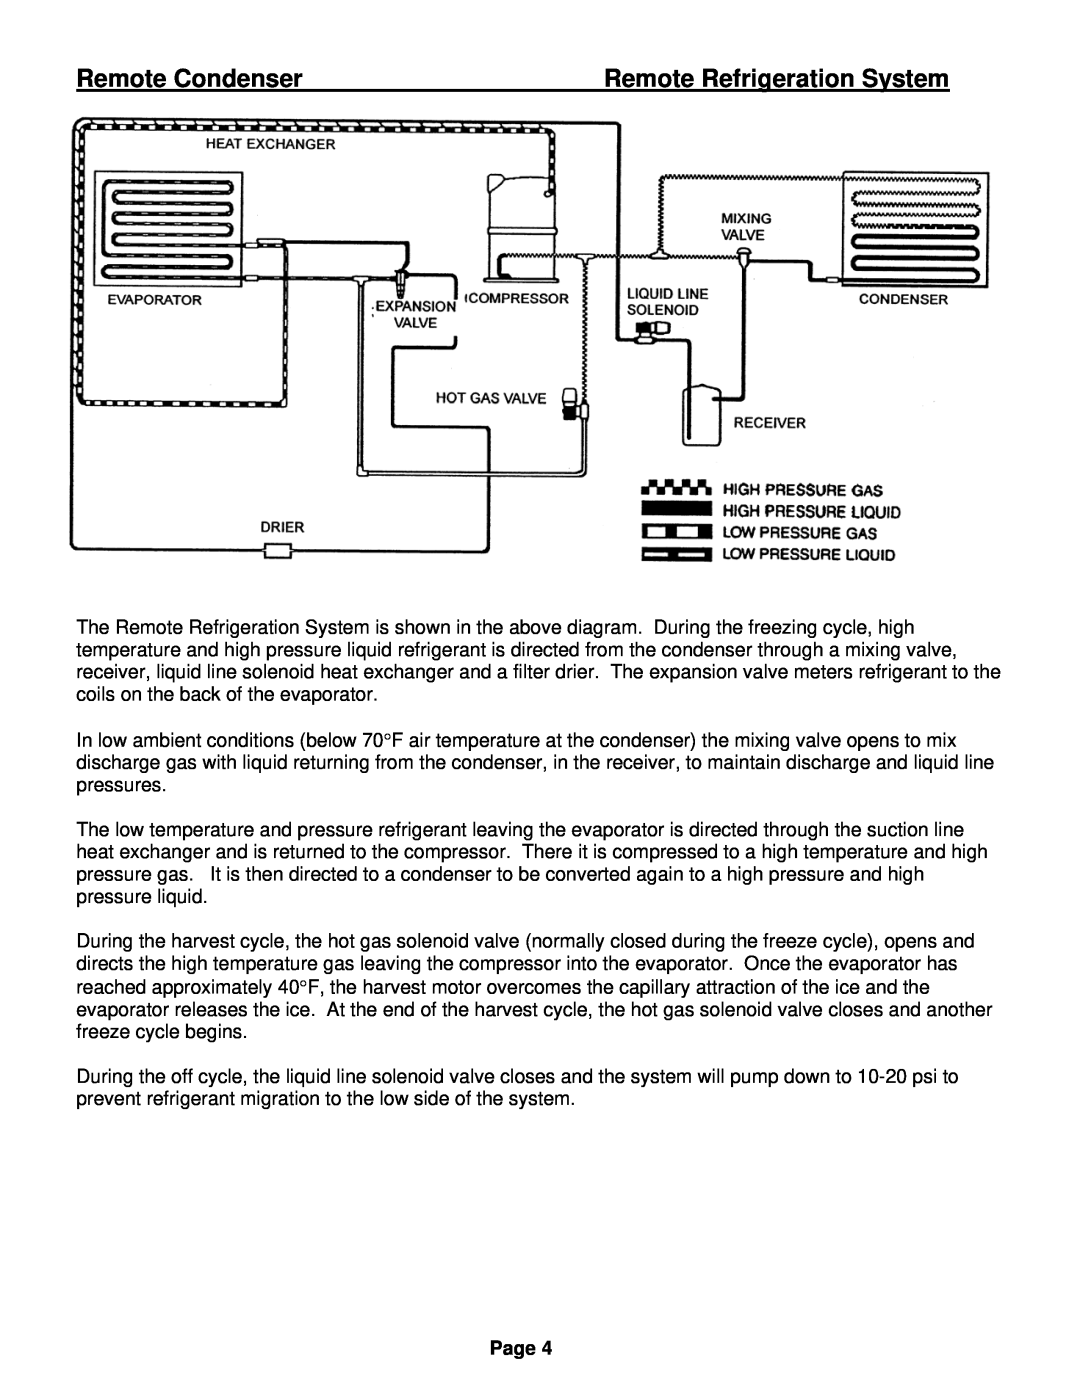 Ice-O-Matic VRC manual Remote Refrigeration System, Remote Condenser 